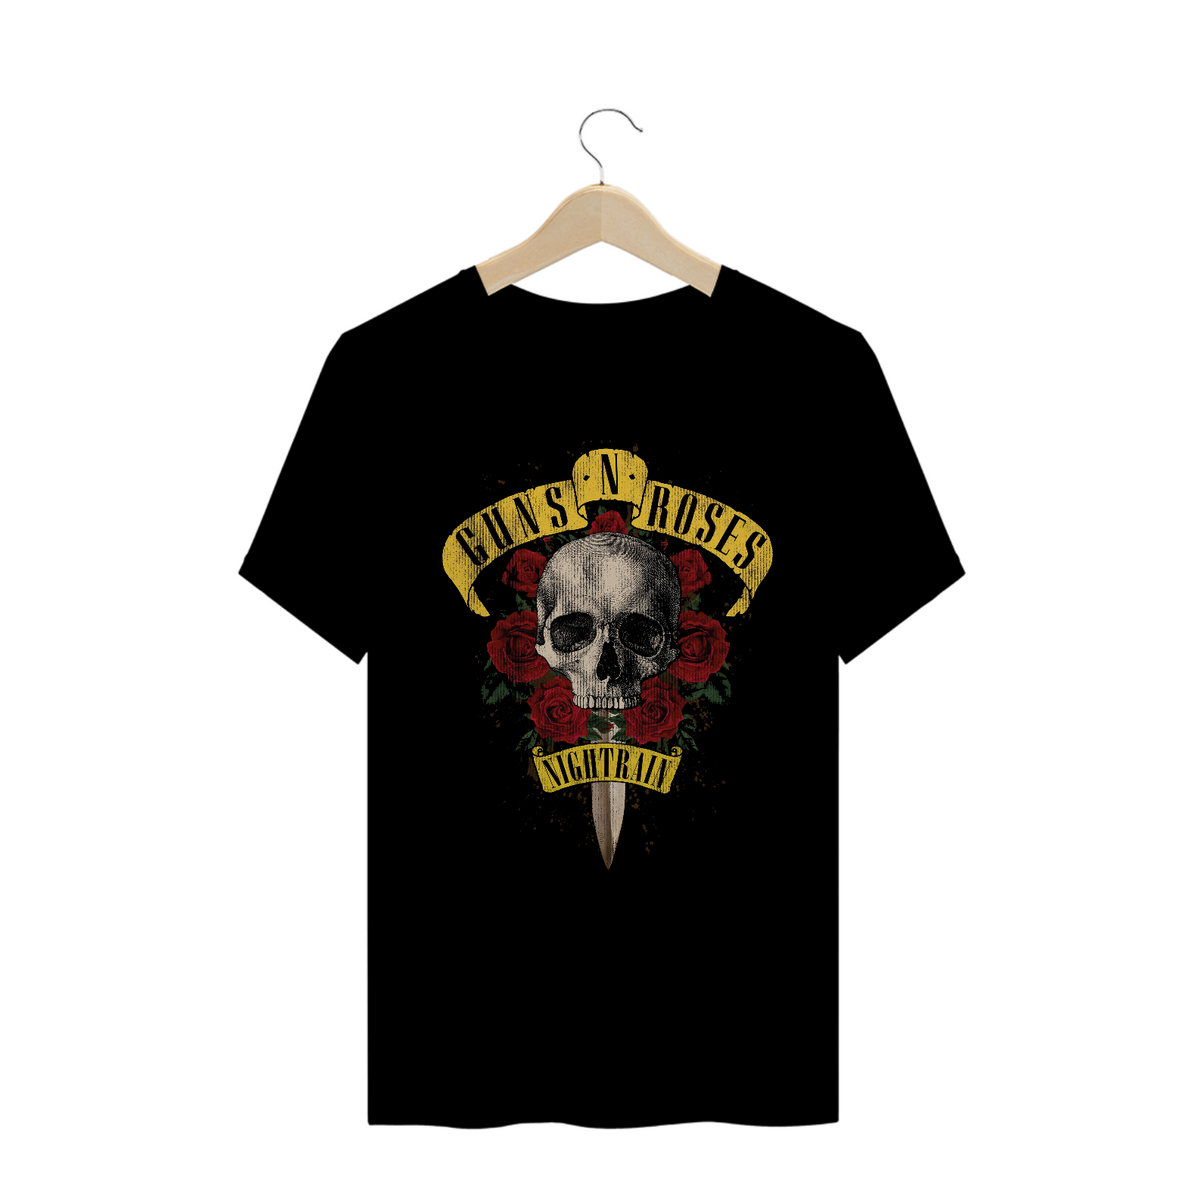 Nome do produto: Camisa Guns N\' Roses - Nightrain Fan Club